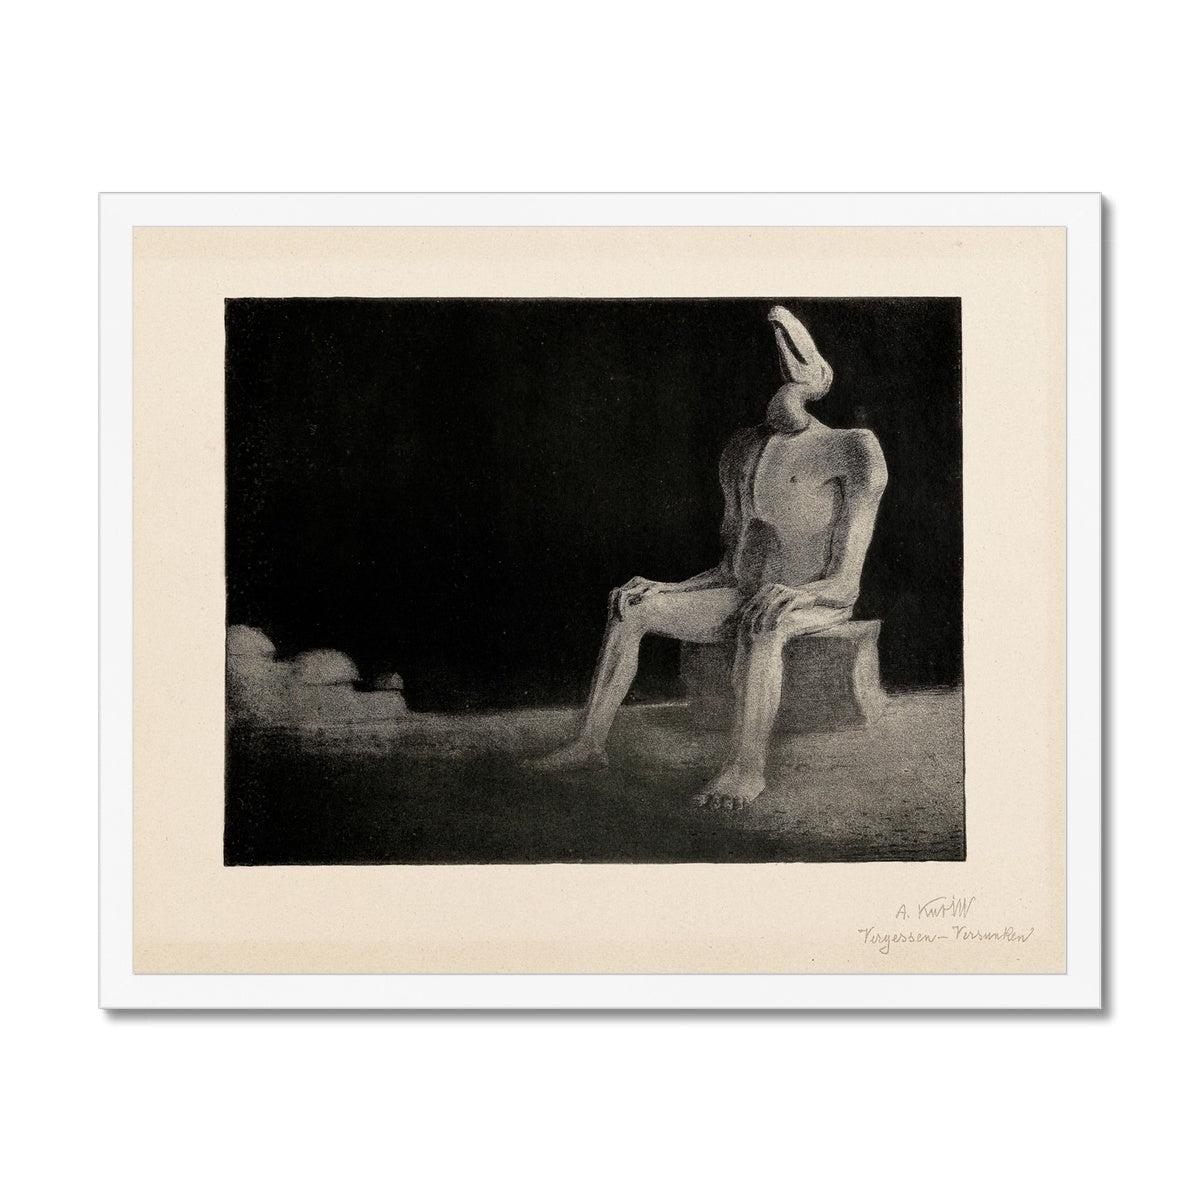 Framed Print 8"x6" / White Frame Framed Alfred Kubin: The Past Forgotten, Swallowed, Symbolist Surrealist Occult Gothic Macabre Framed Art Print